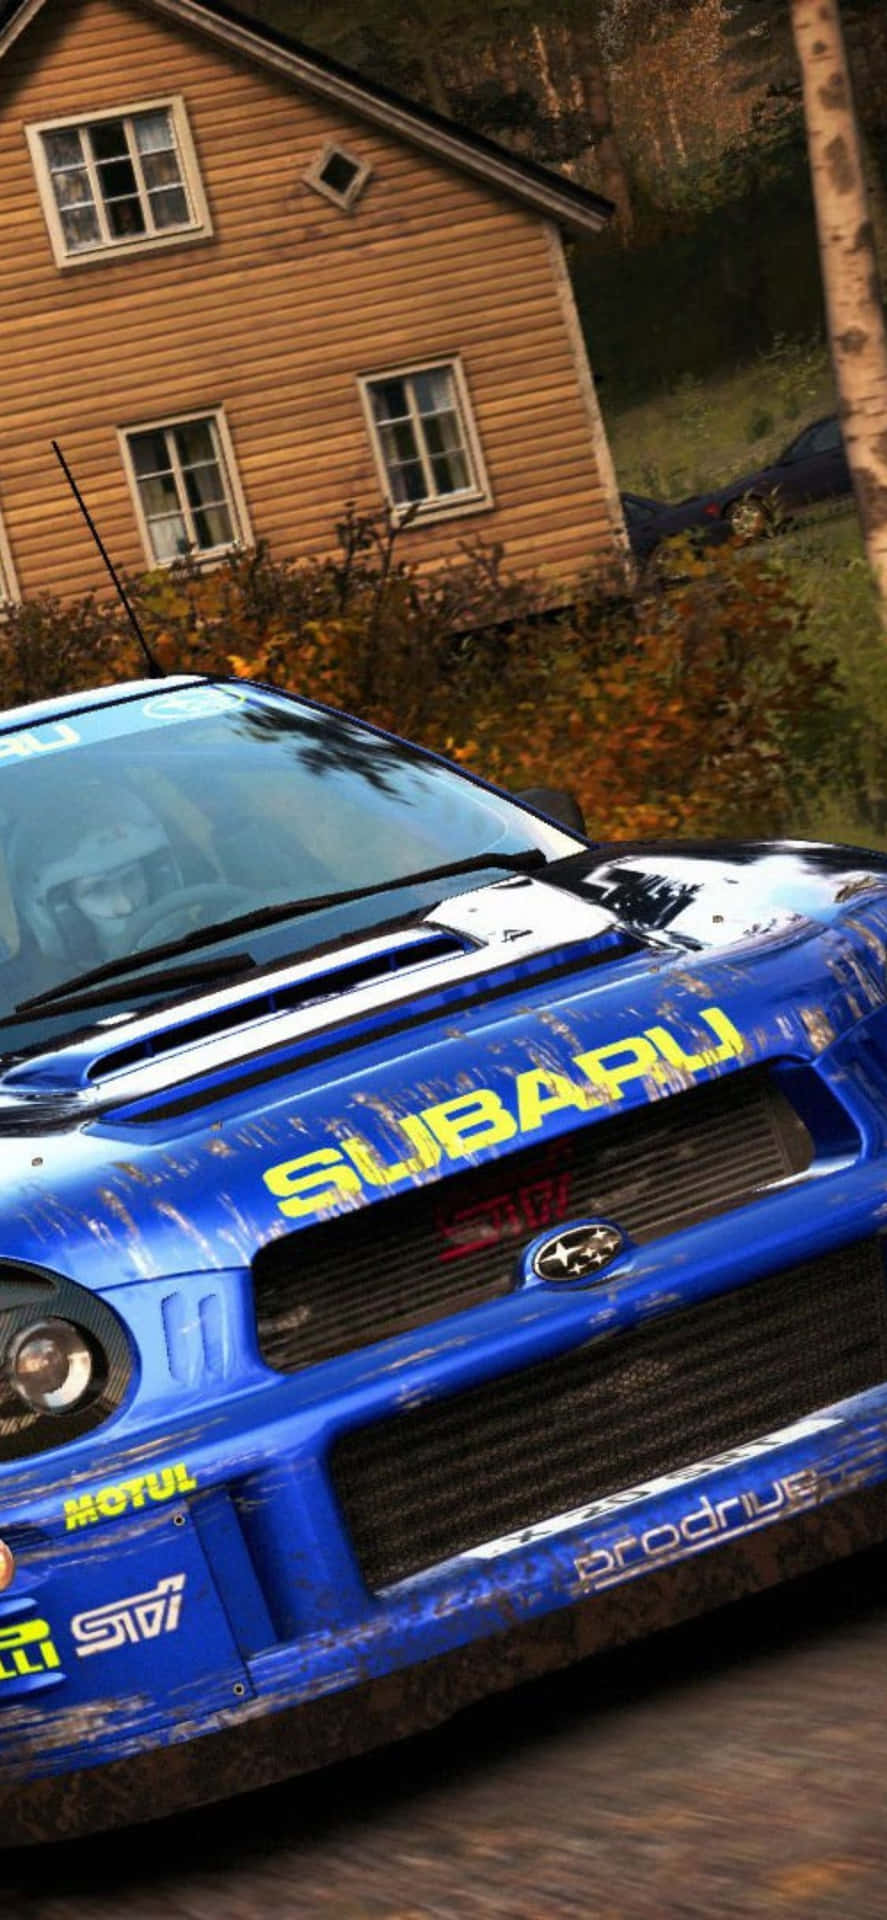 Unamacchina Subaru Wrx Rs3 Di Colore Blu Che Guida Lungo Una Strada